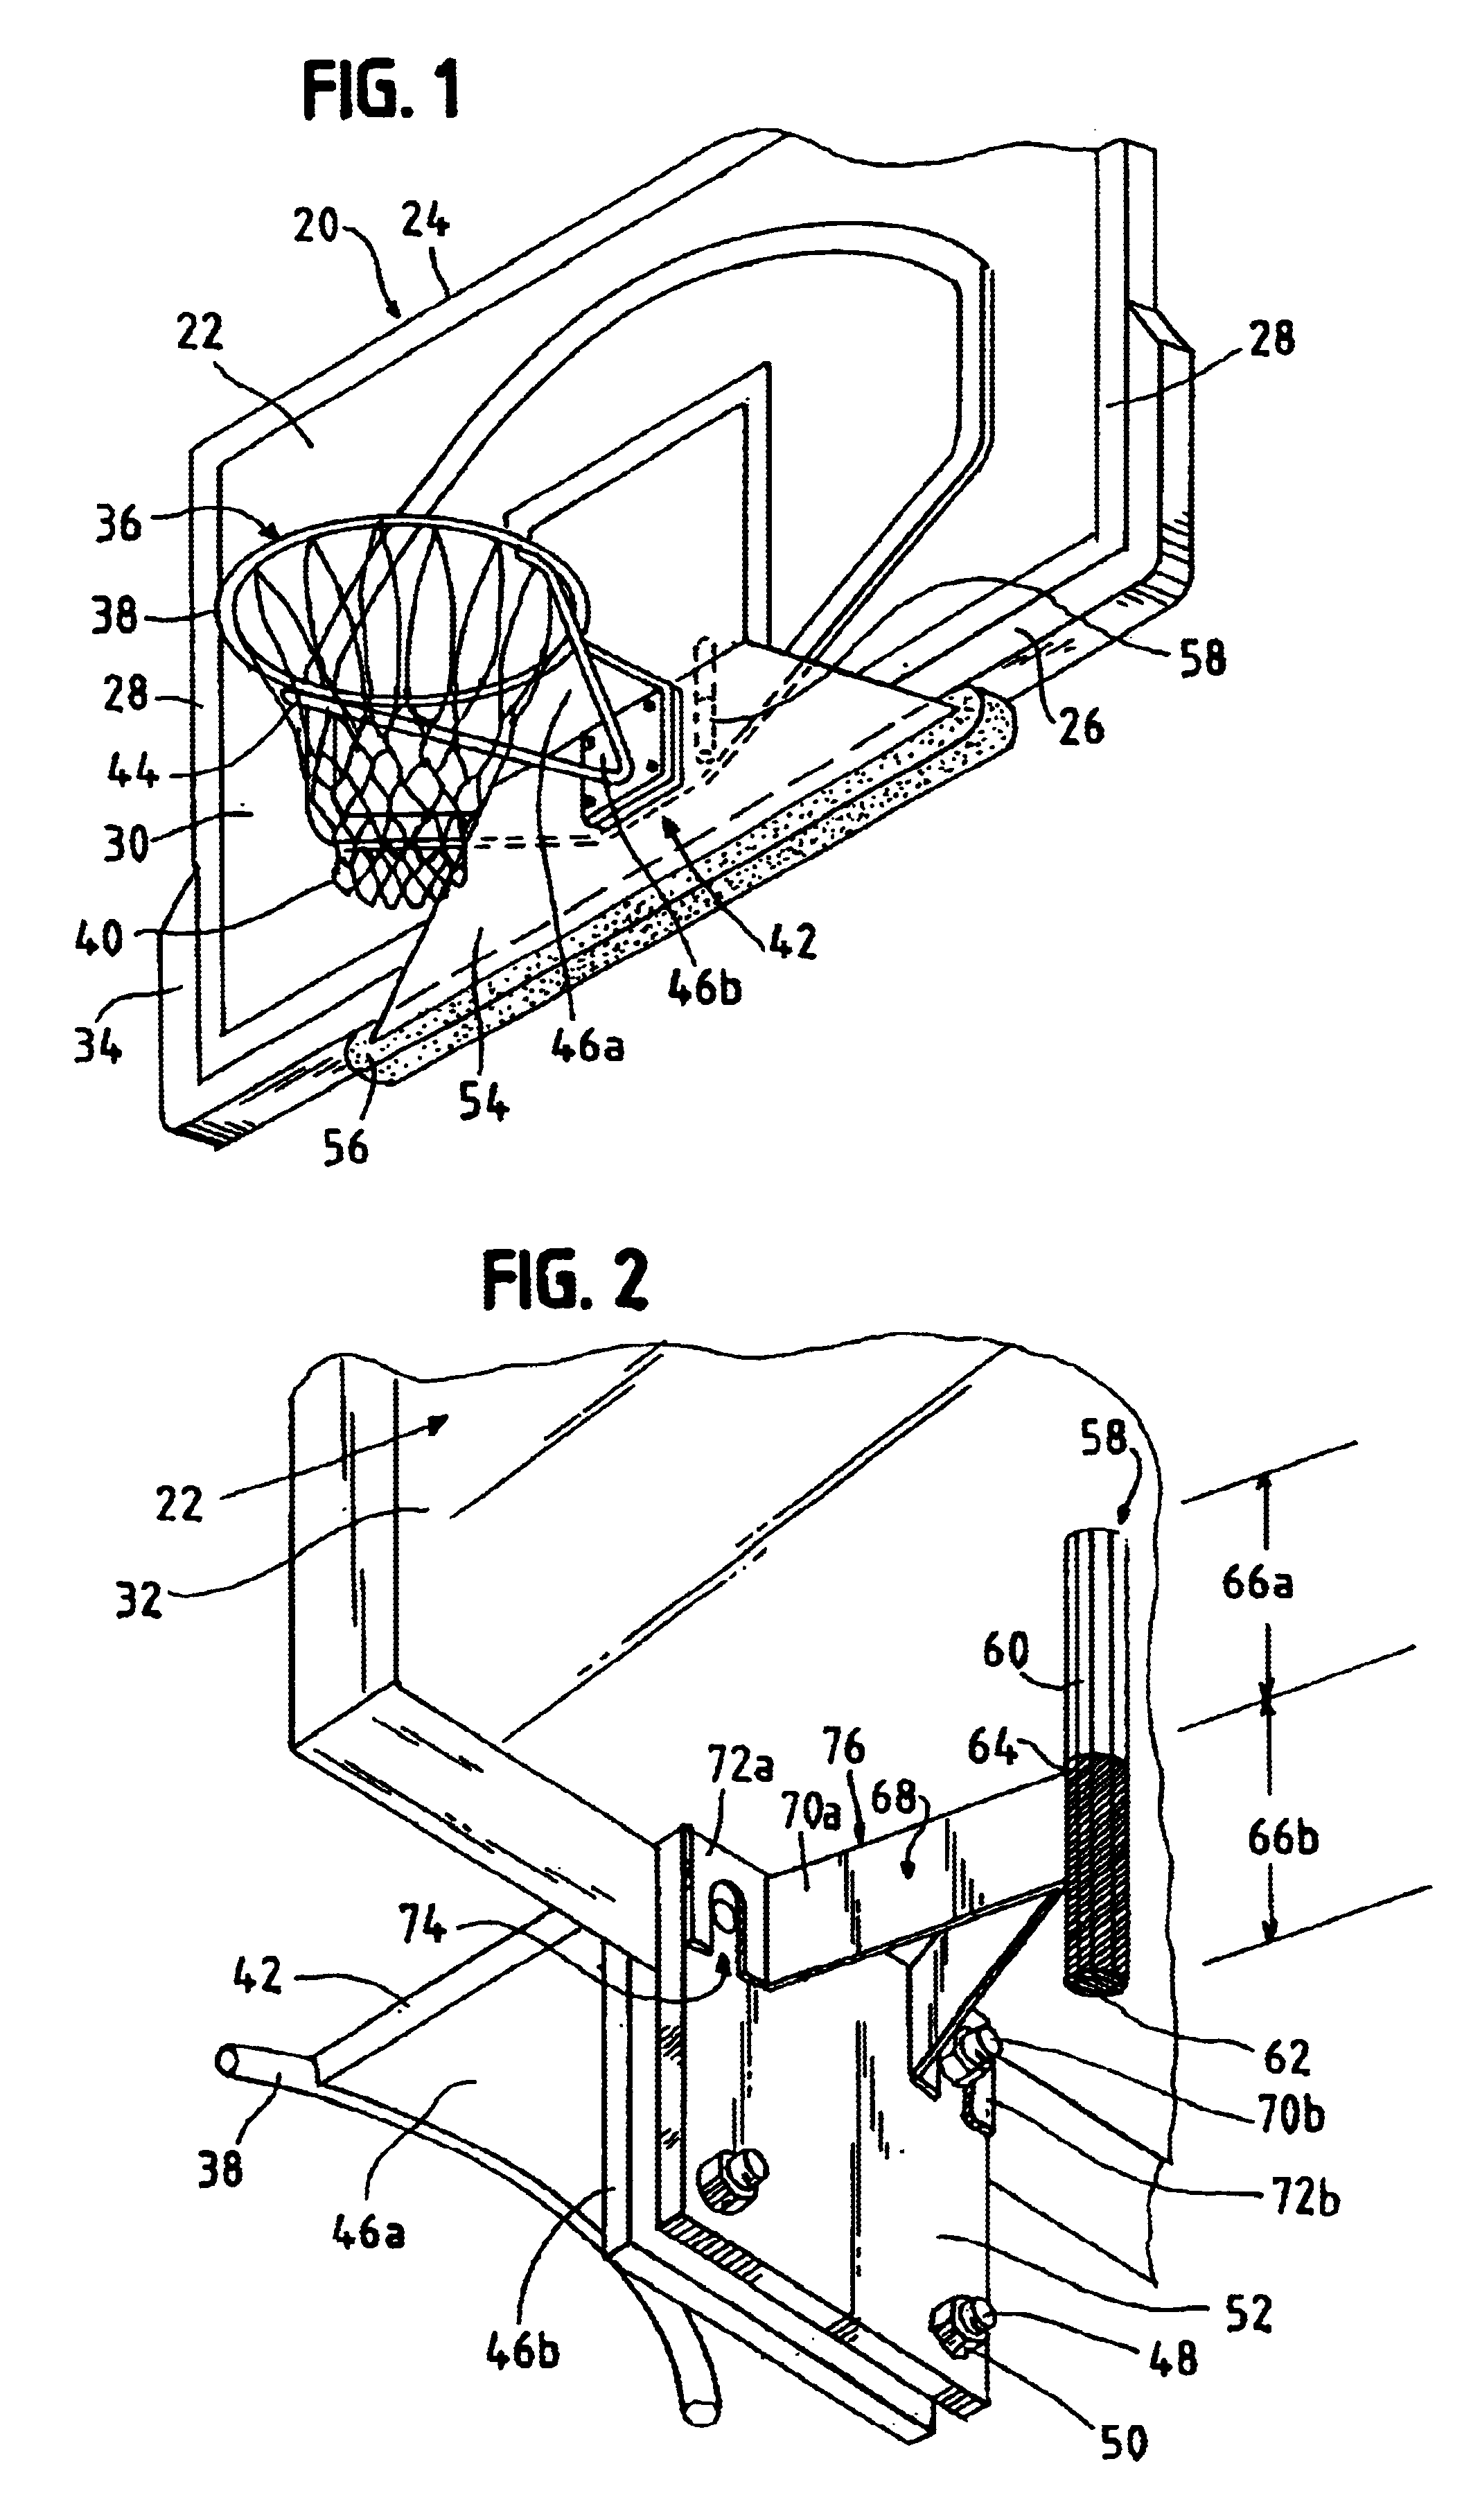 Sharp shooter basketball apparatus